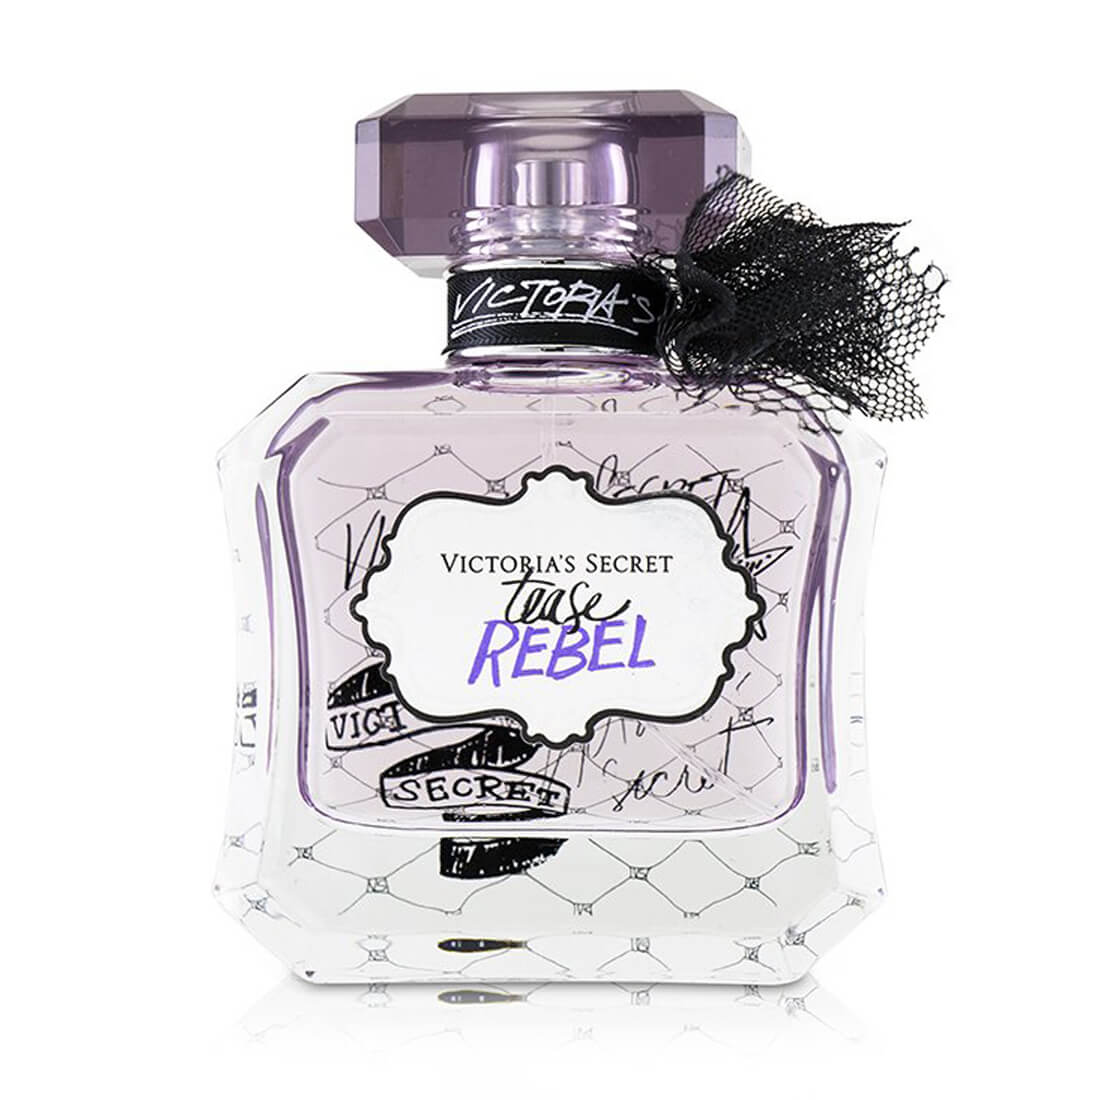 Victoria's Secret Tease Rebel Eau De Perfume - 50ml